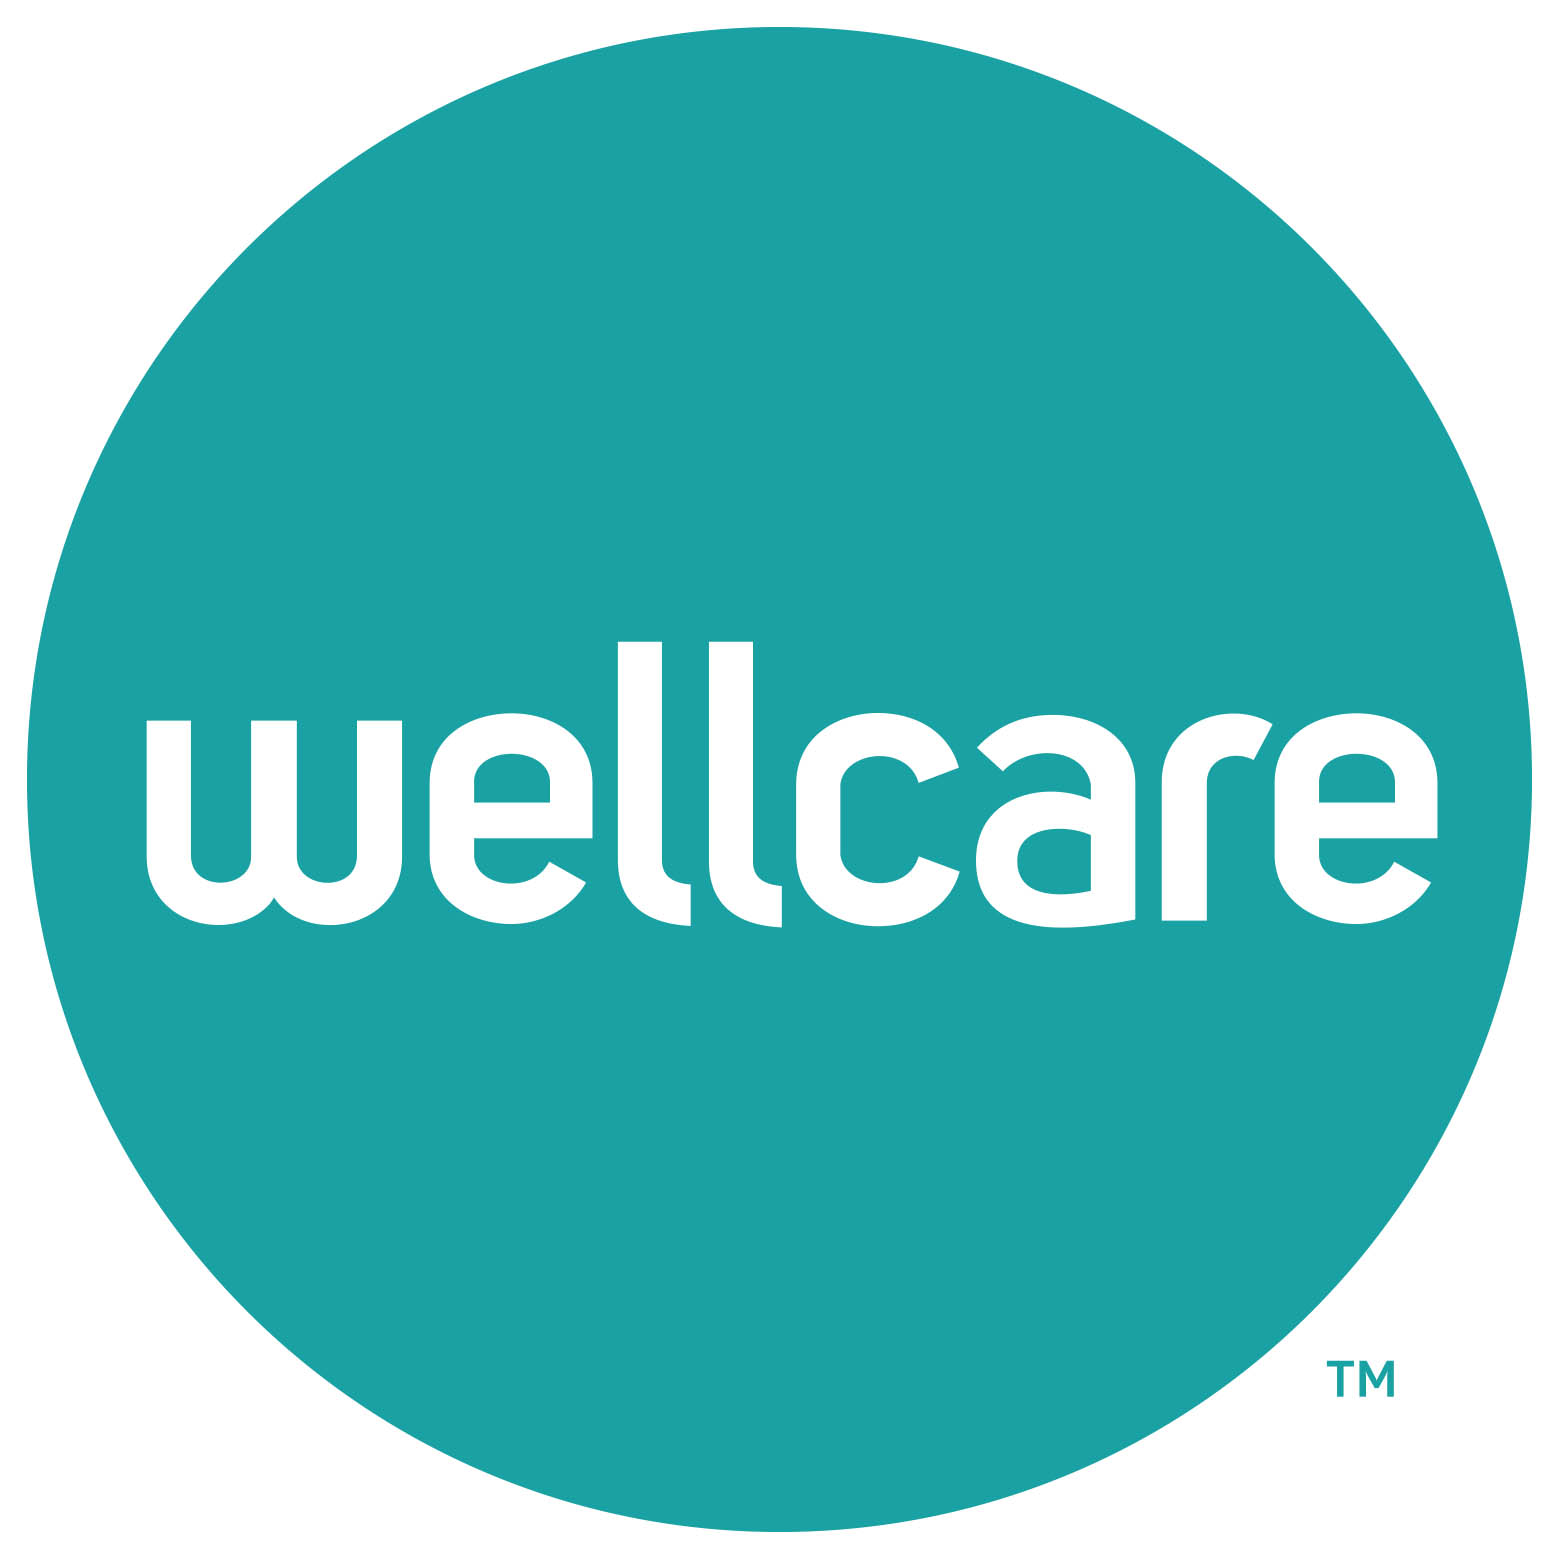 Wellcare_logo_tealcircle_hi_res (002)